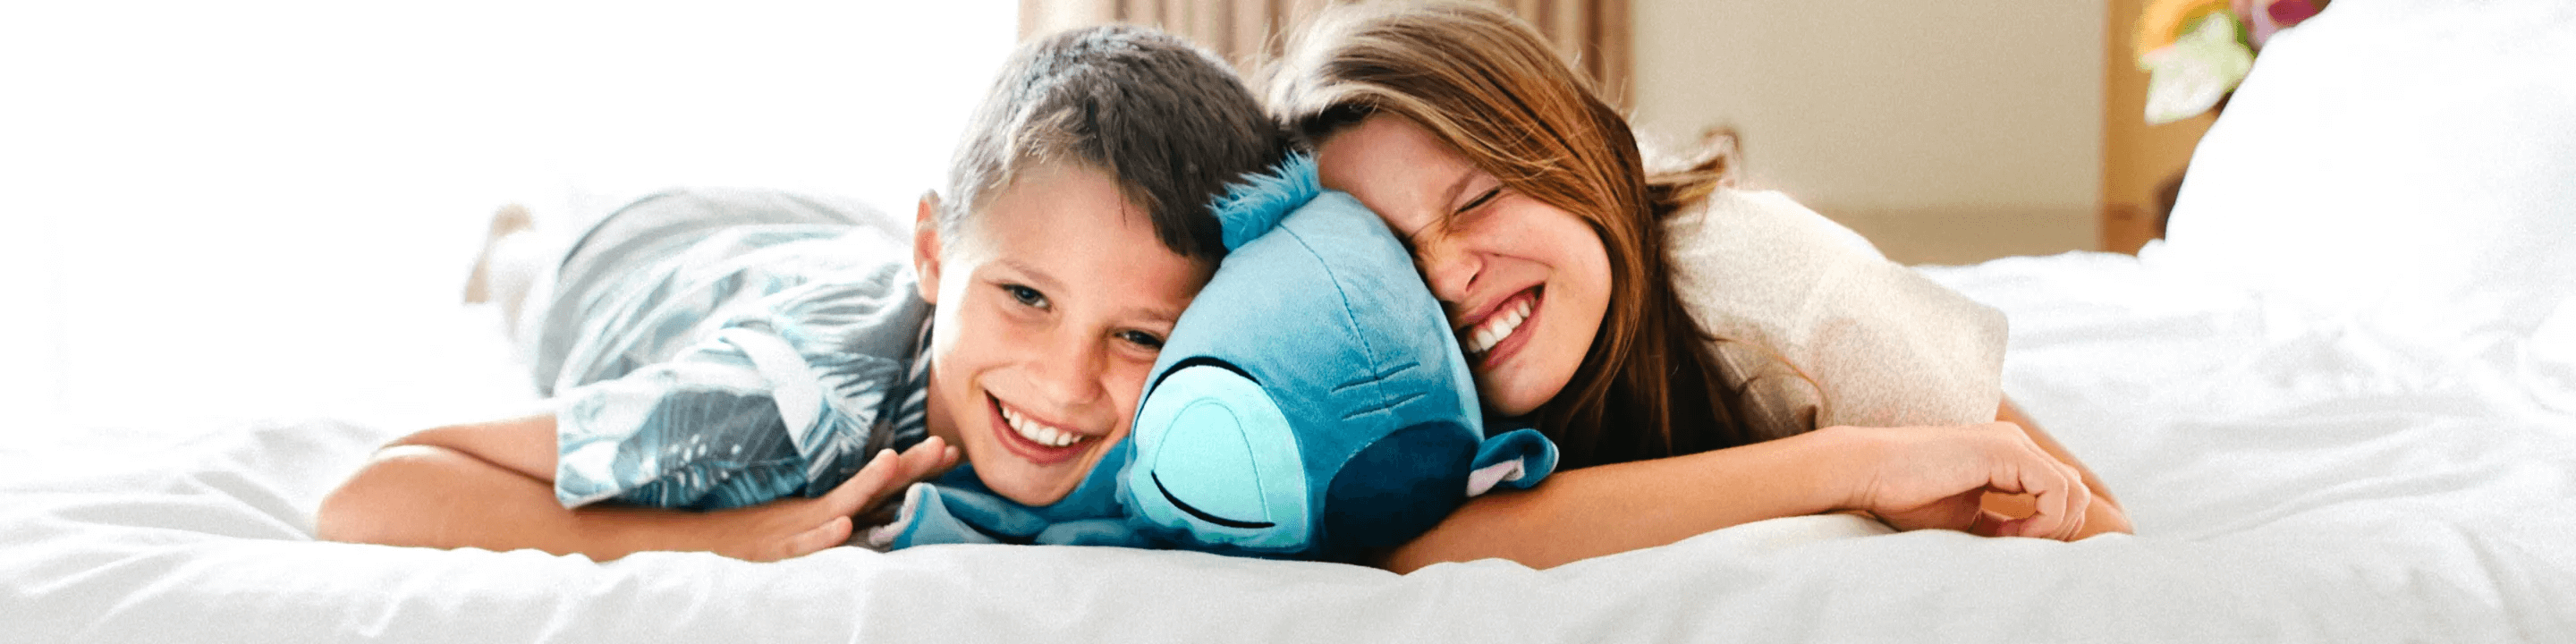 Children hugging lilo and stitch plush toy